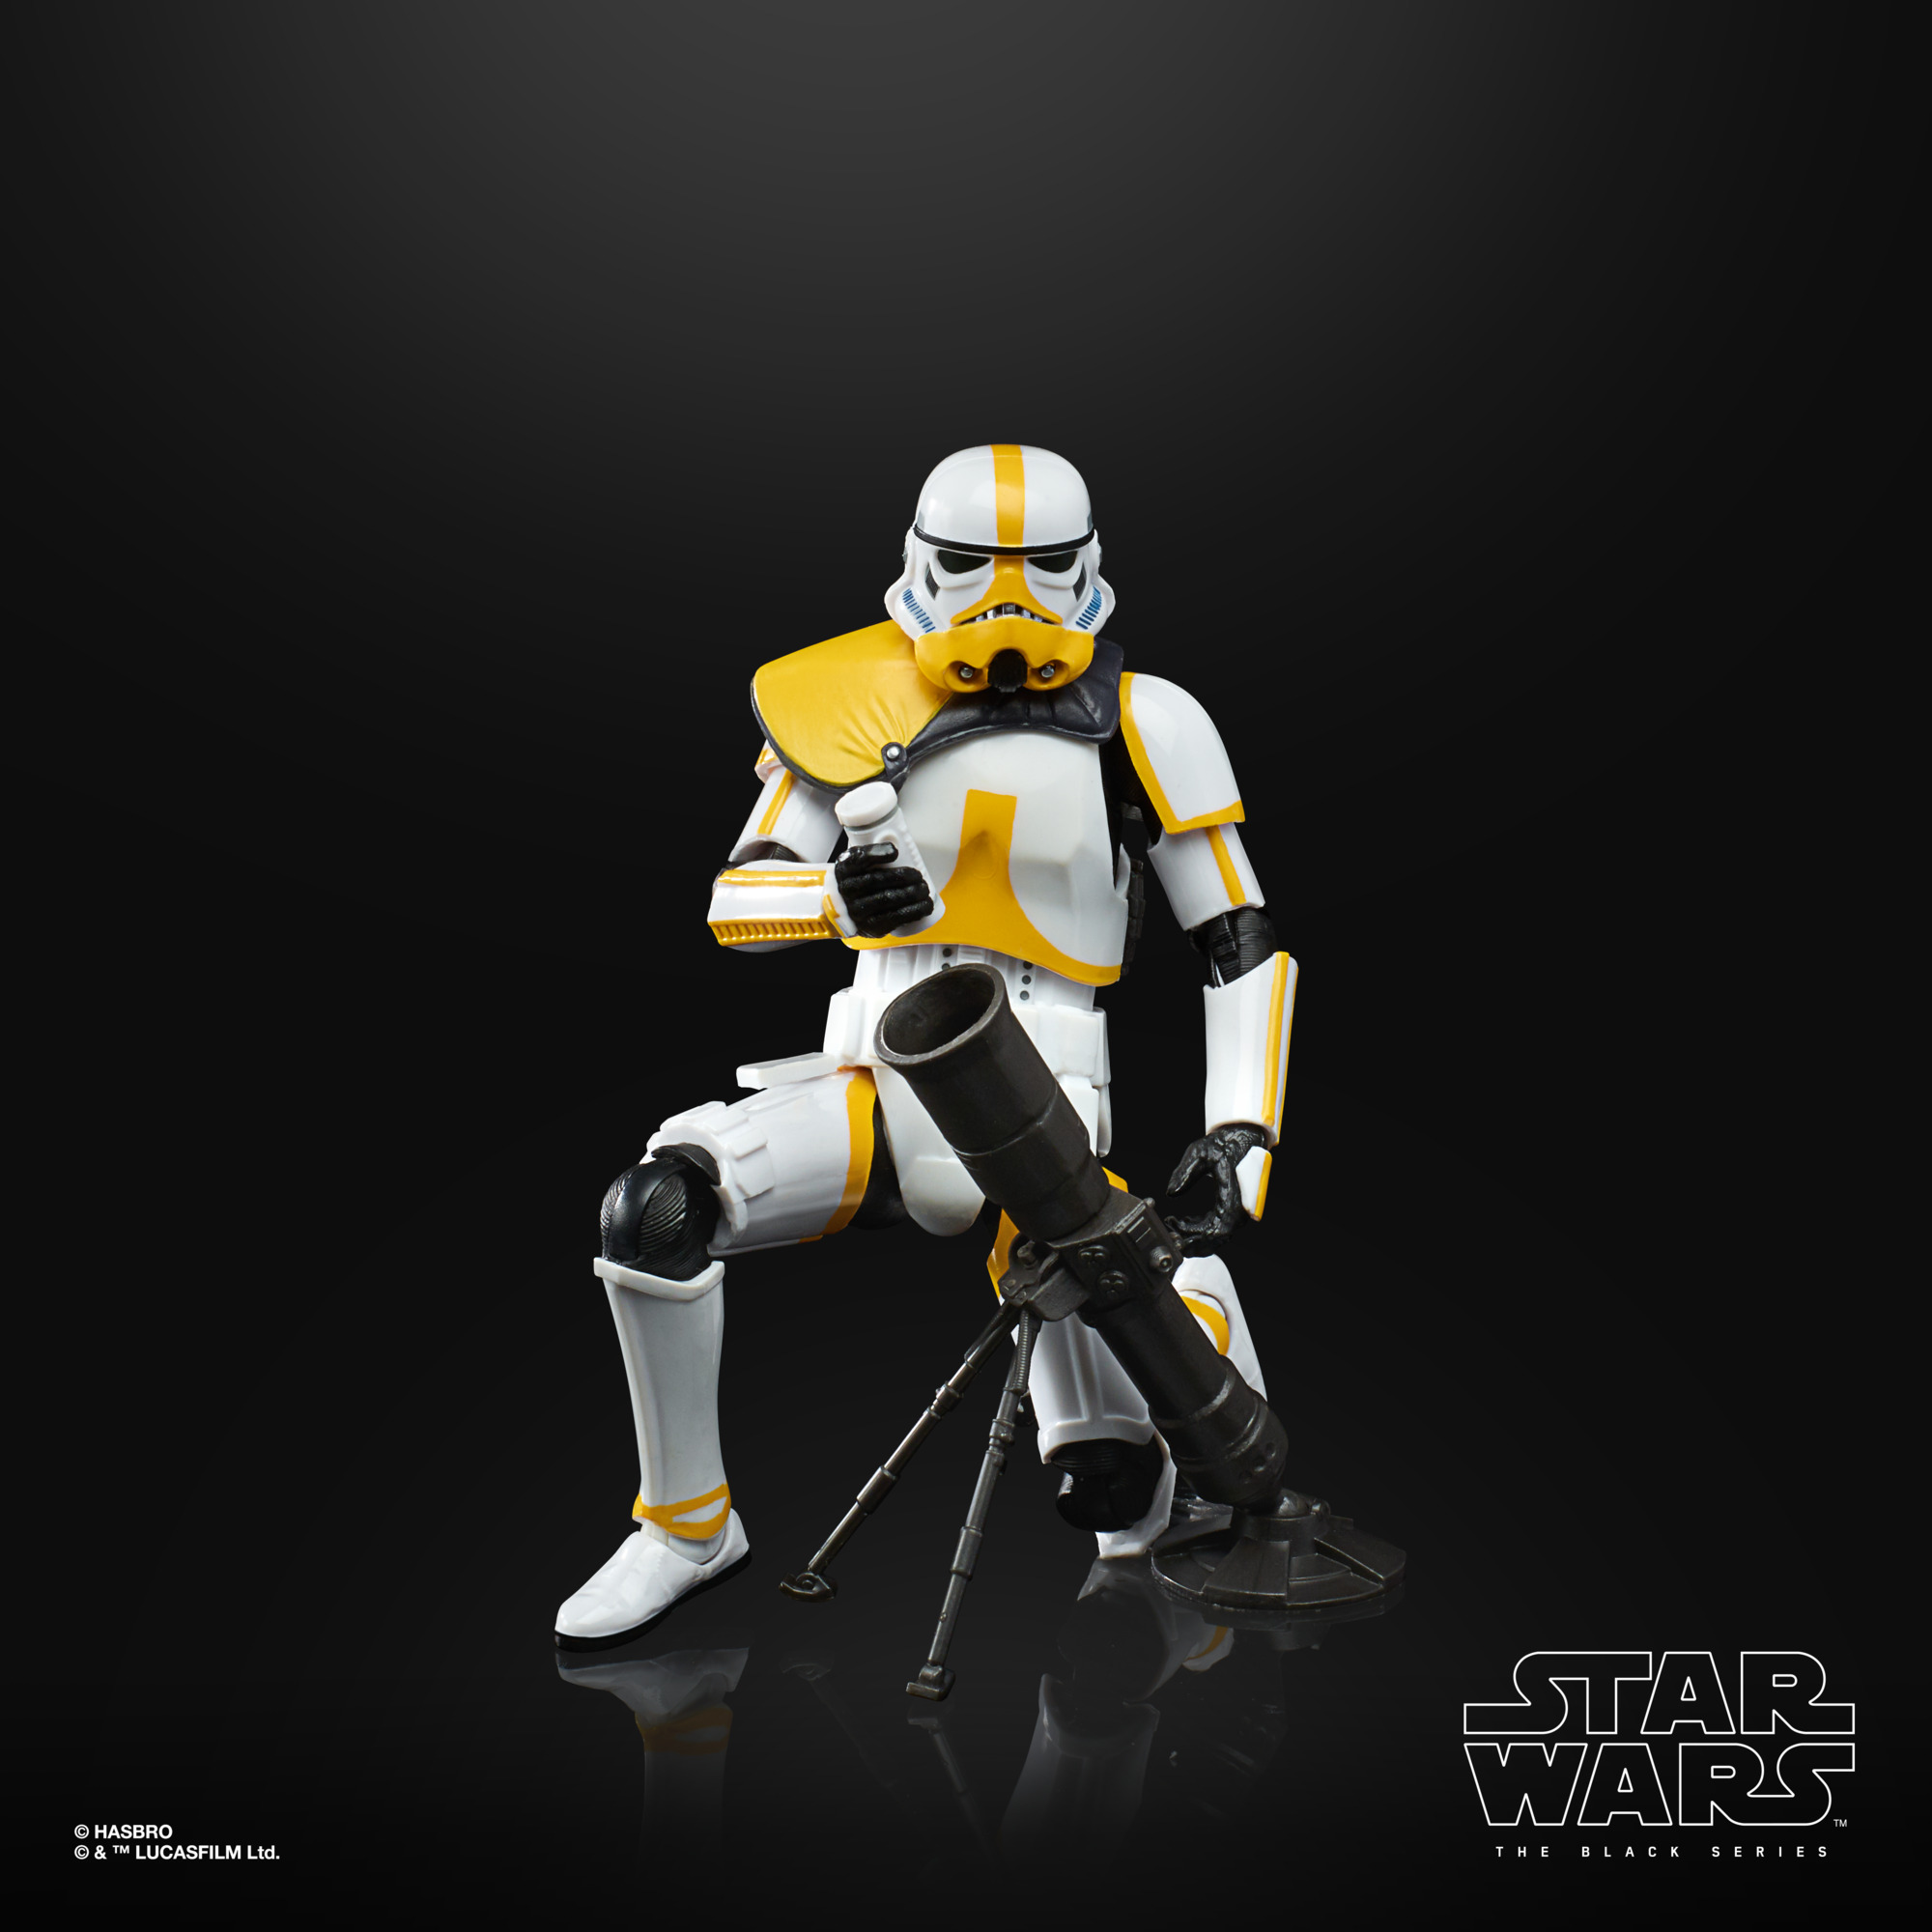 Star Wars Black Series: Artillery Stormtrooper figure revealed